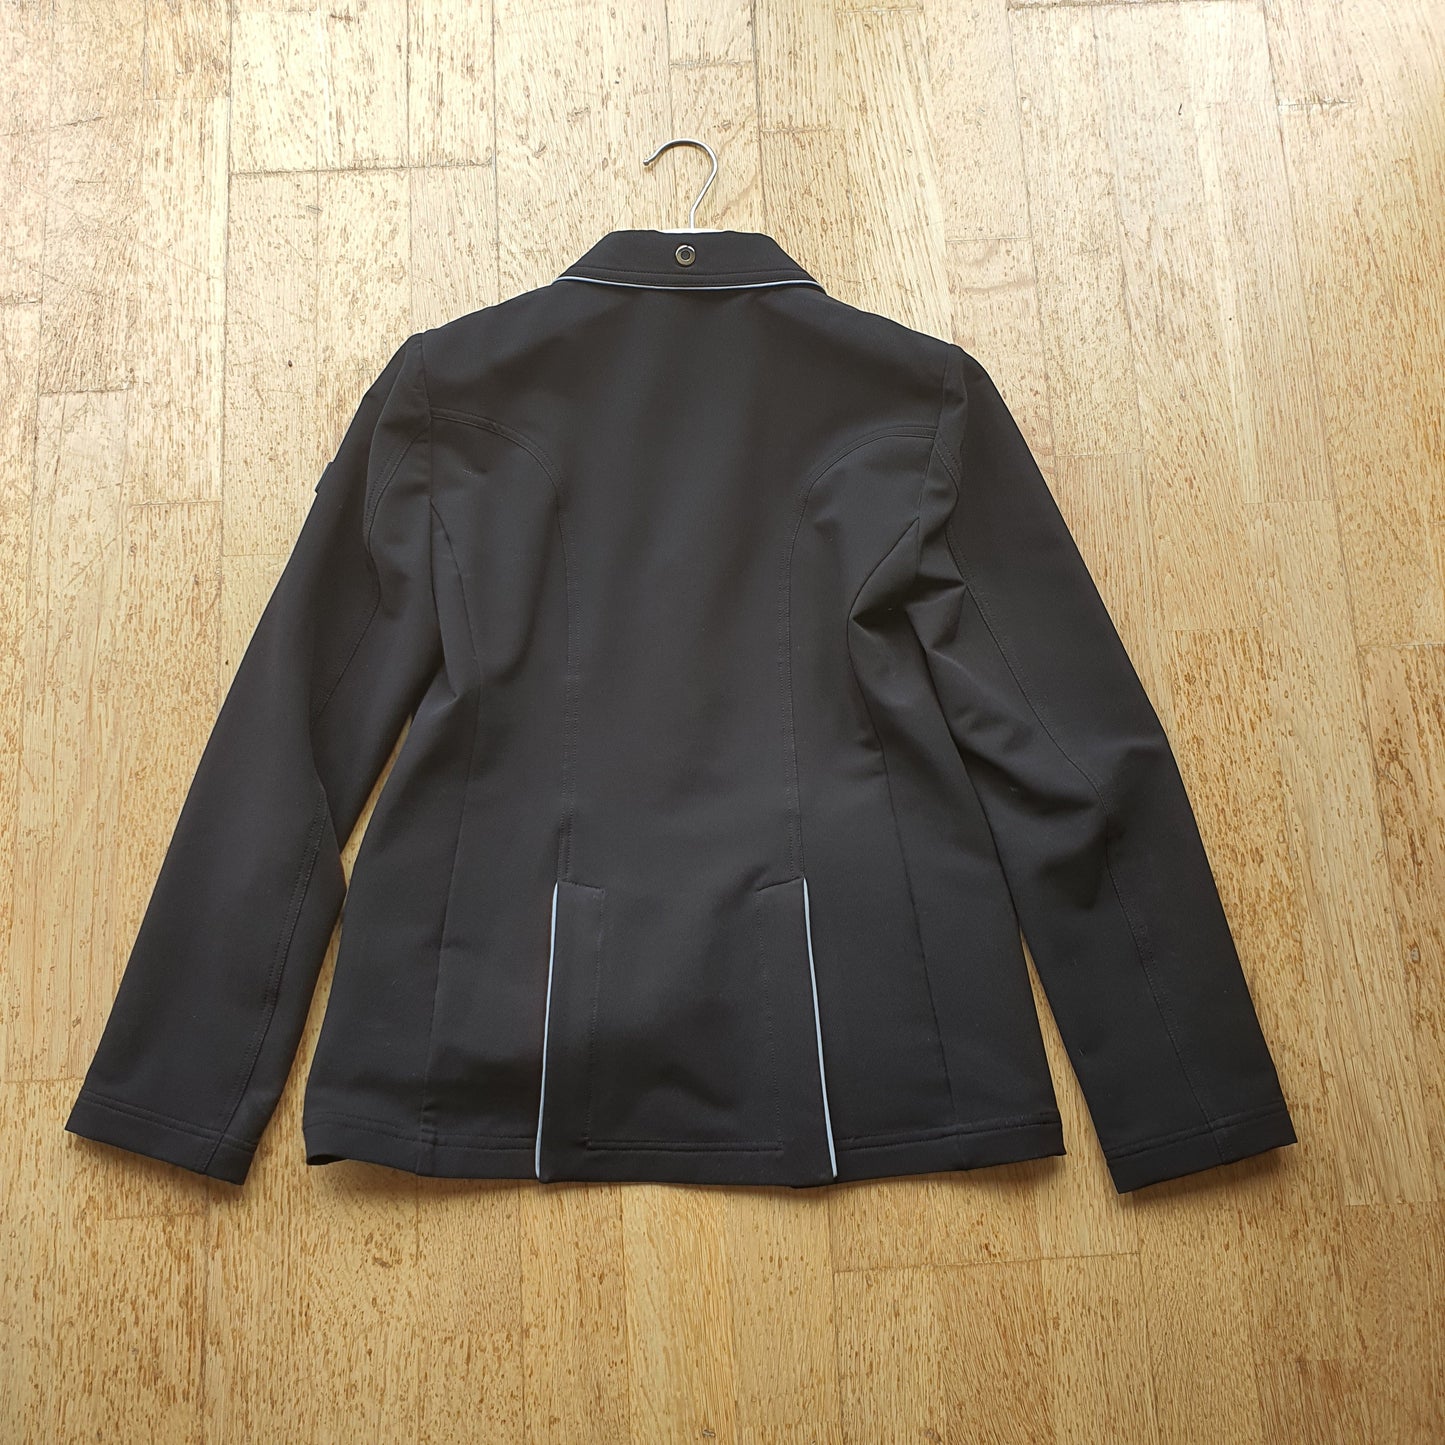 Equiline boys black show jacket  (boys size / age 14/15)